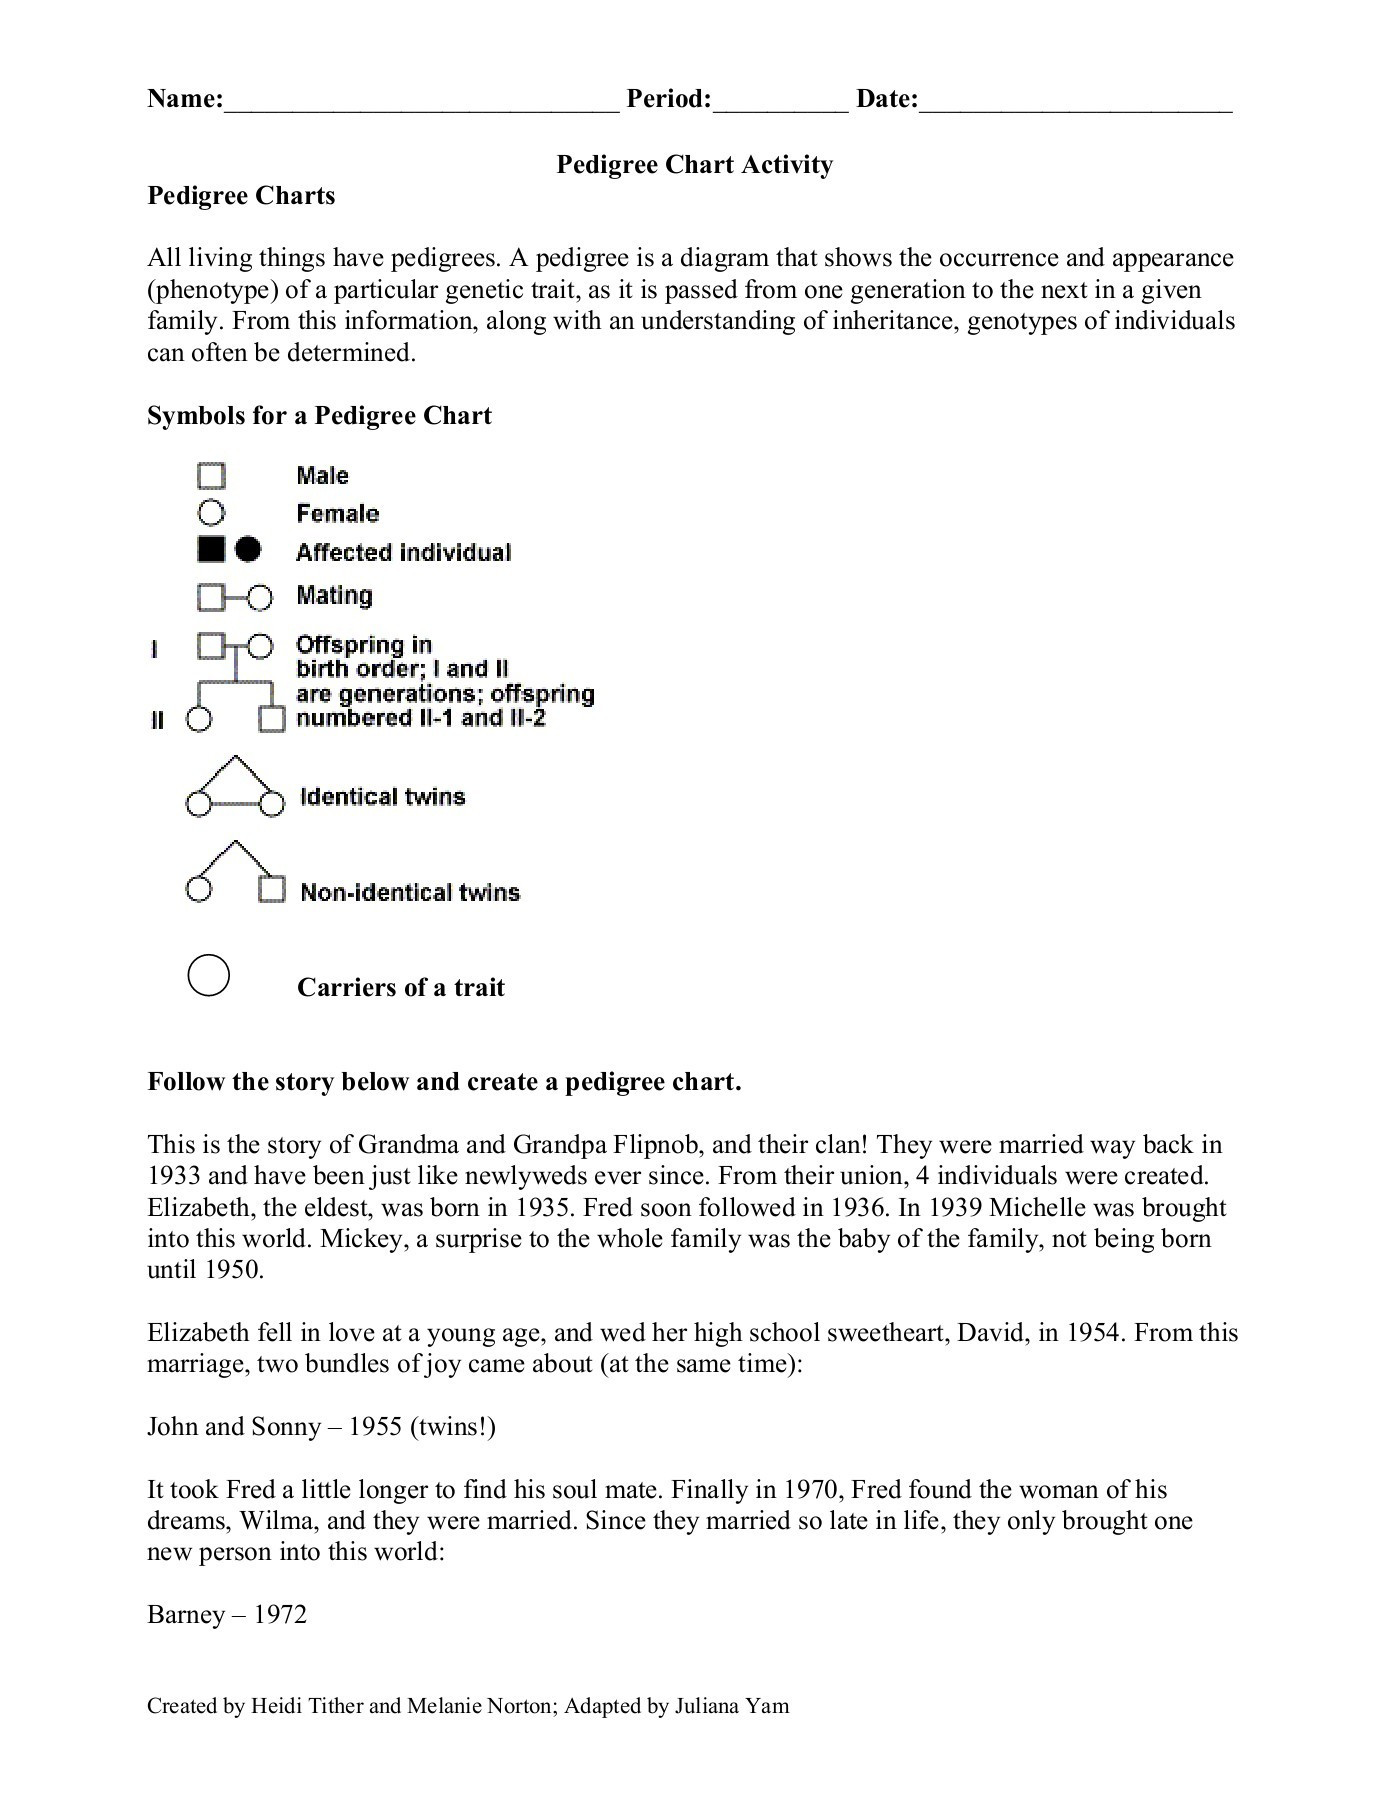 Pedigree Worksheet Answer Key Pedigree Chart Activity Tracy Unified School District